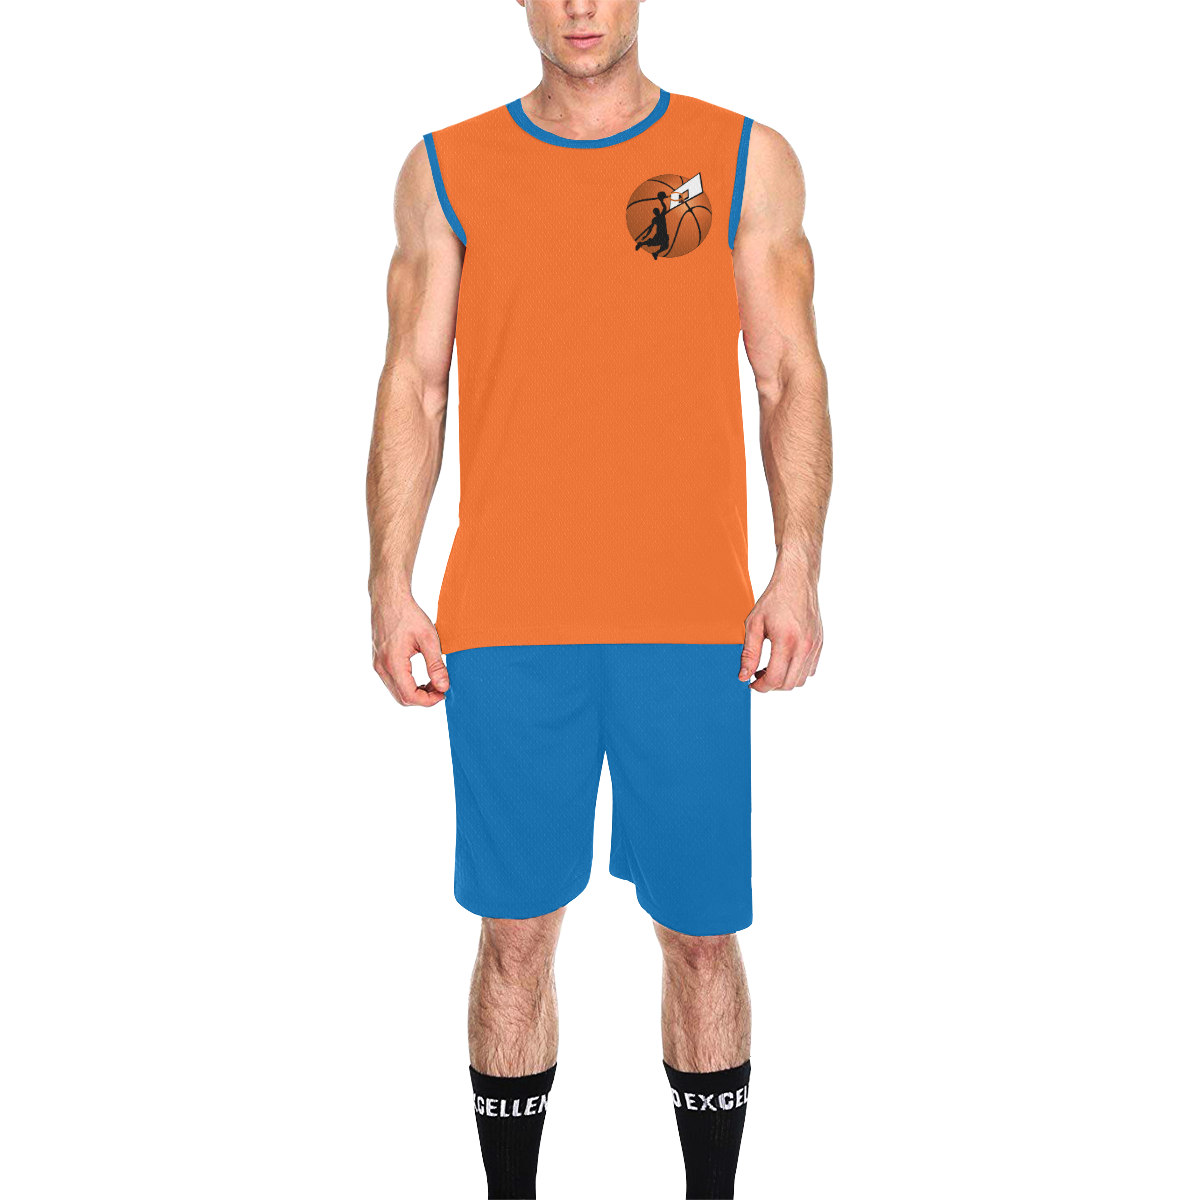 Slam Dunk Basketball Player Cyan Blue and Orange All Over Print Basketball Uniform